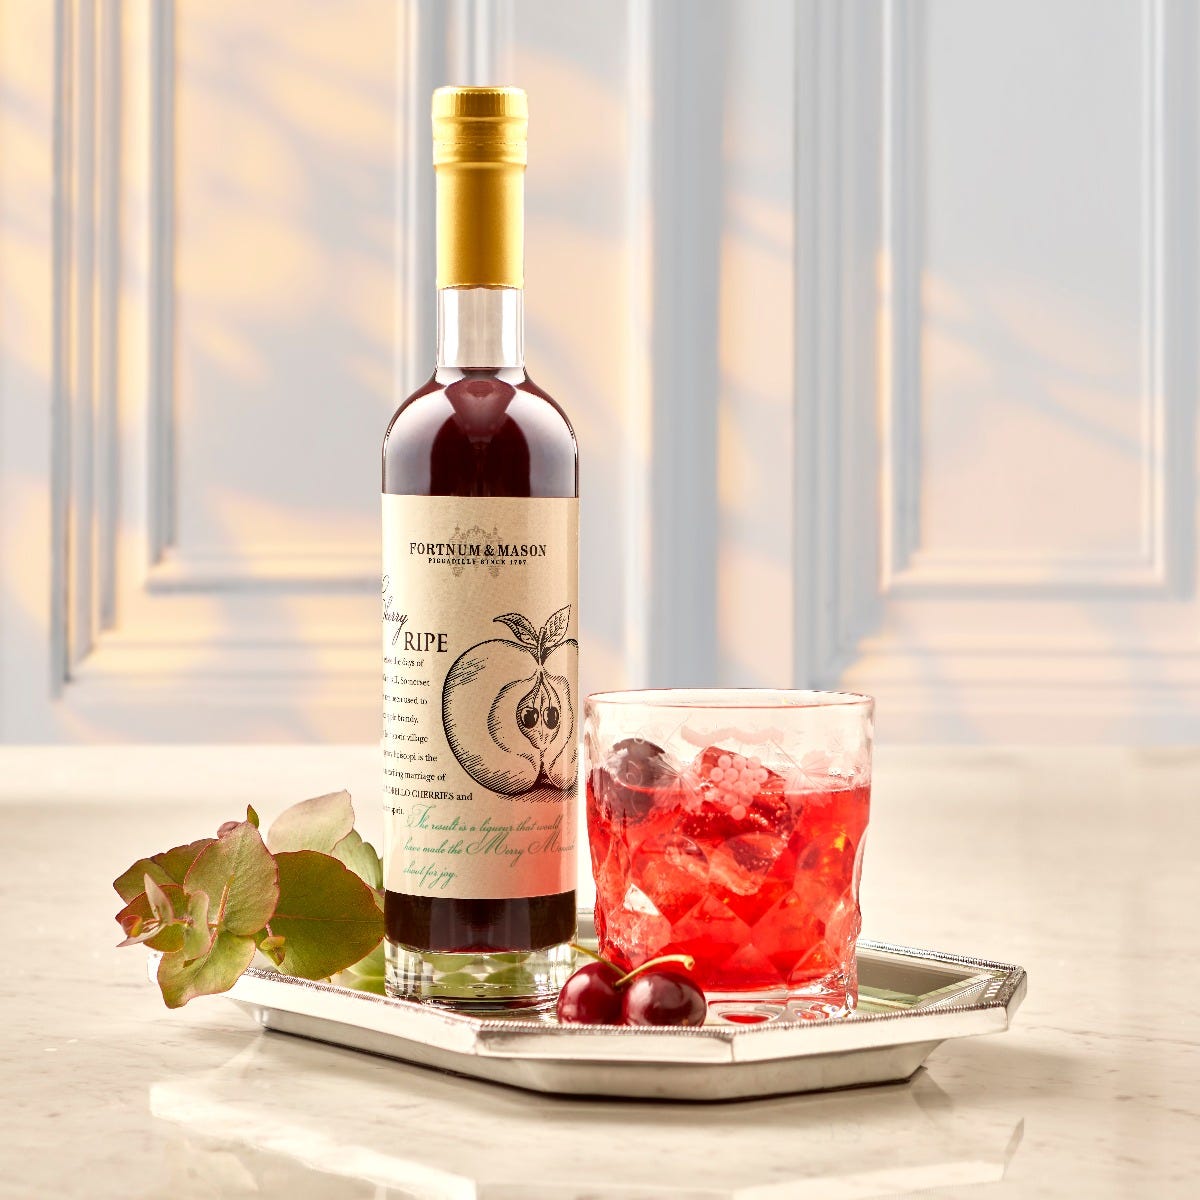 Somerset Cherry Ripe Liqueur, Cider Brandy Co., 35cl, Fortnum & Mason